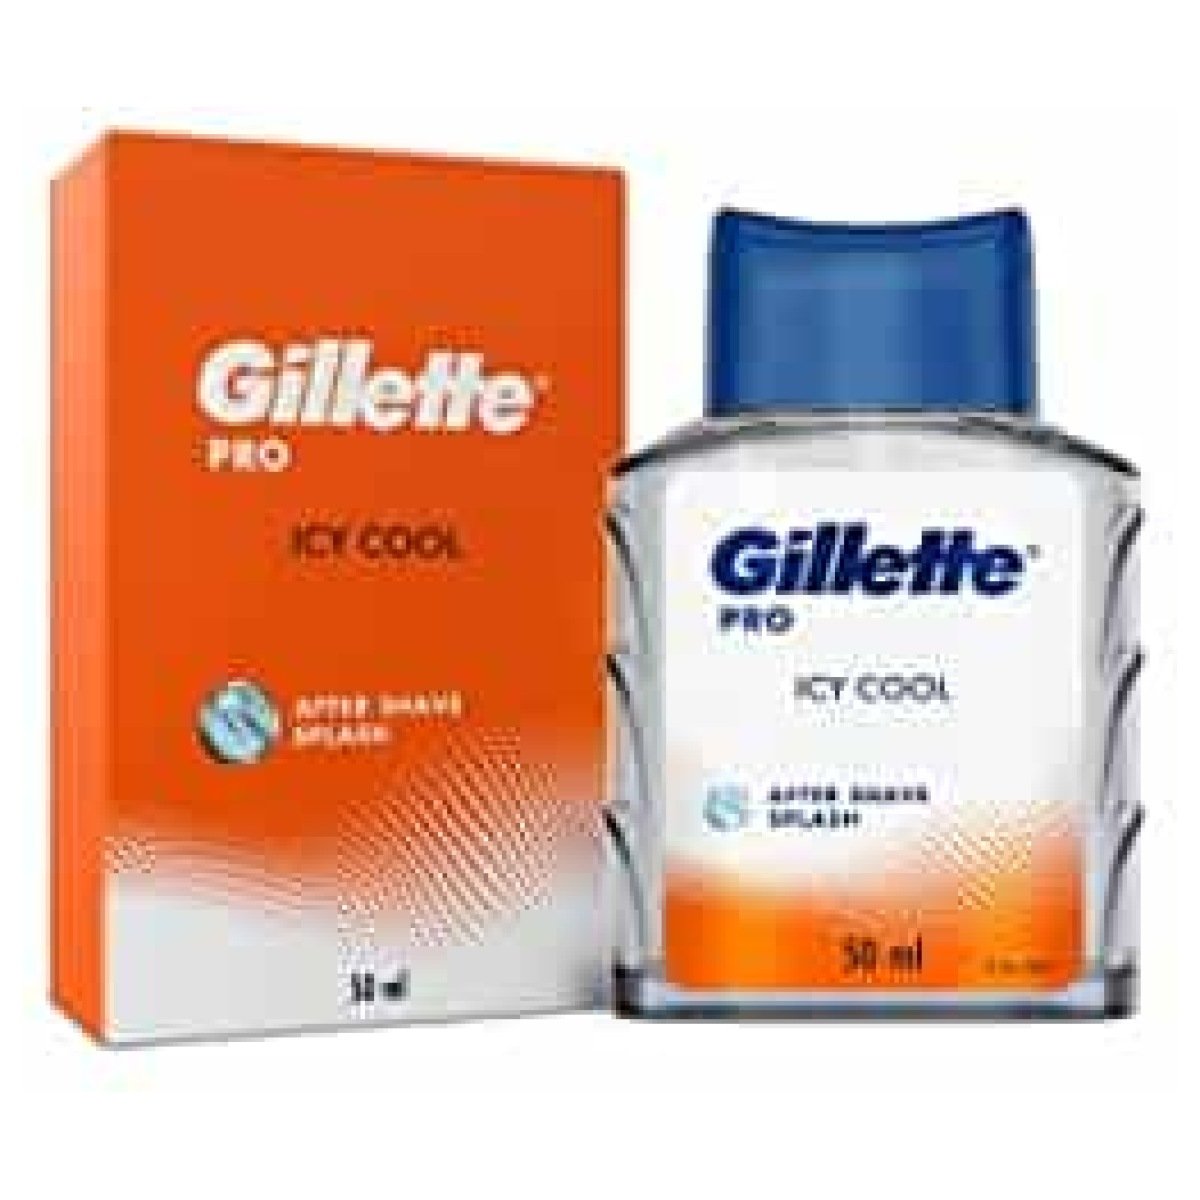 Gillette PRO AFTER SHAVE SPLASH ICY COOL 50ML